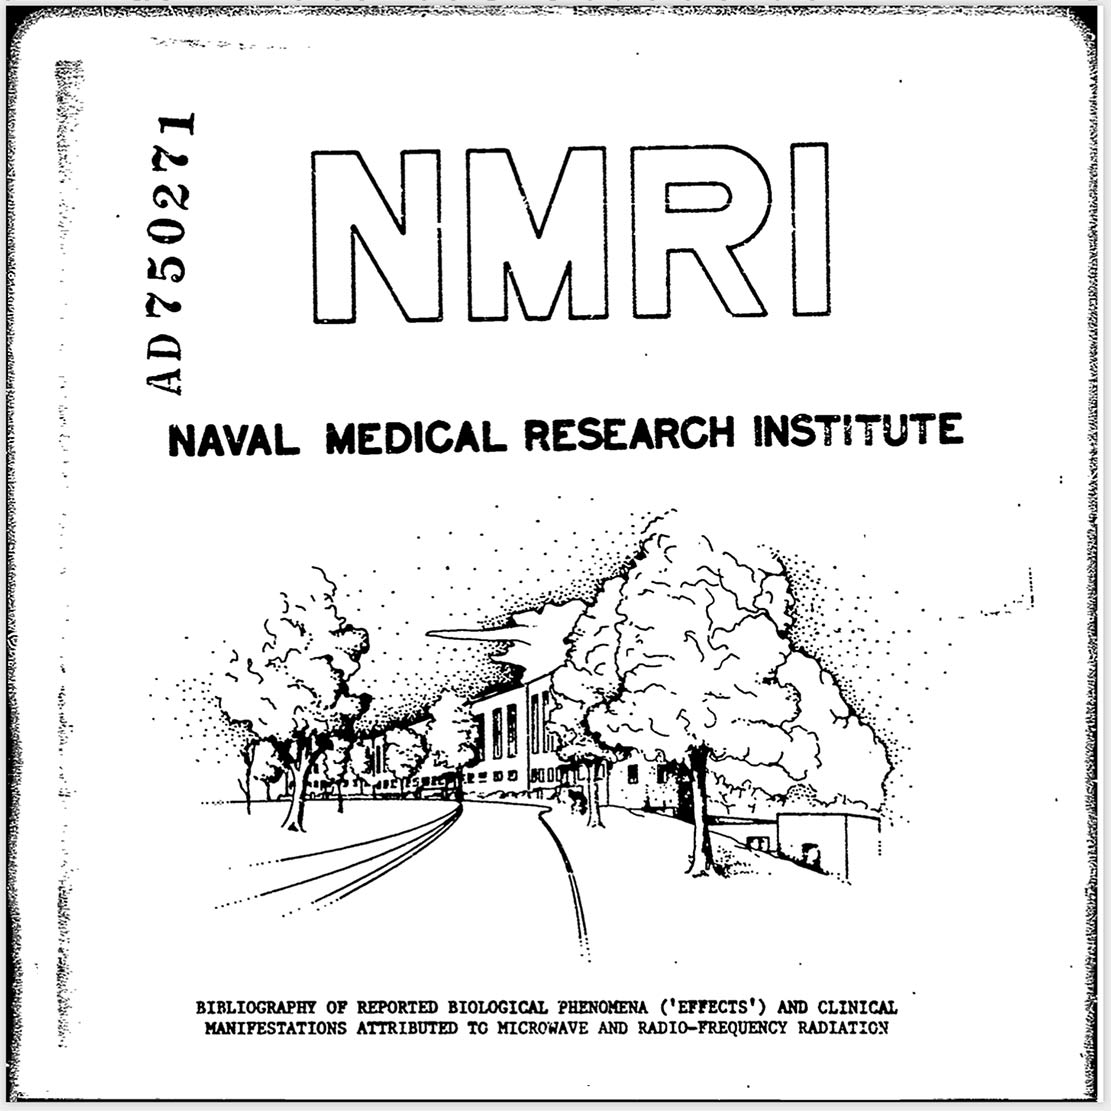 Naval Medical Research Institute 1971/72 